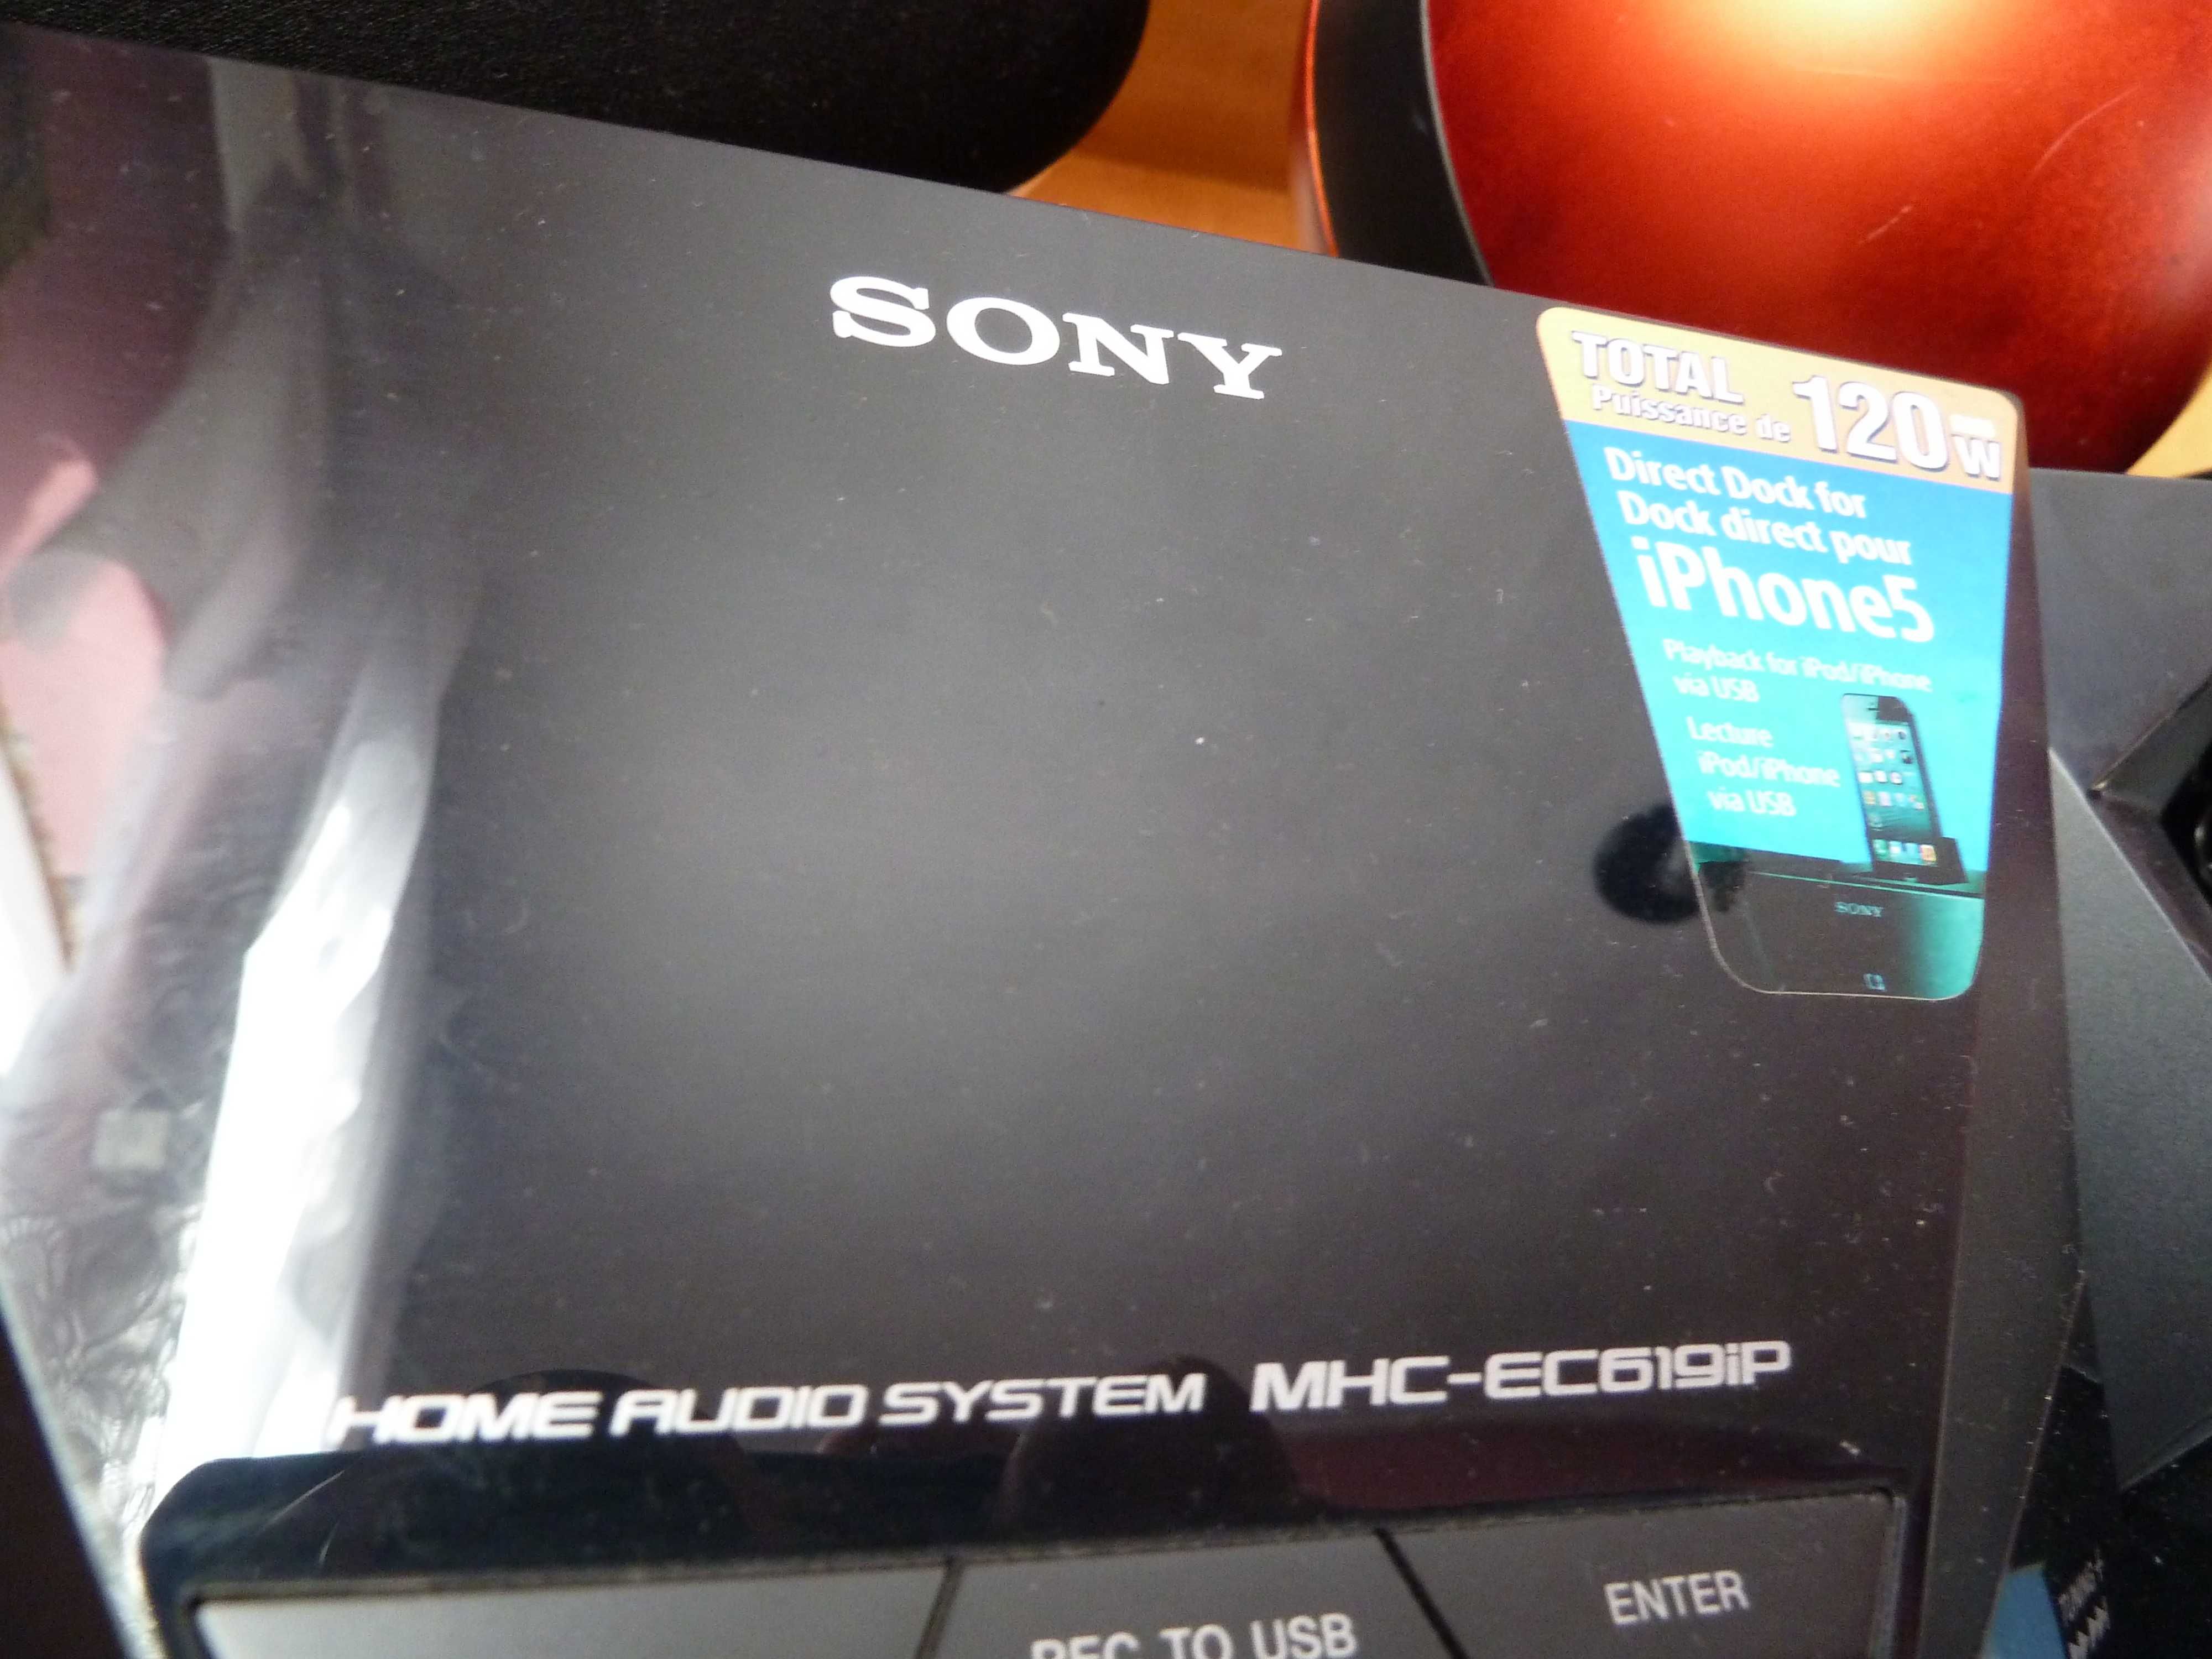 Minisistem audio Sony EC619IP, CD Player, Docking, tuner FM, USB